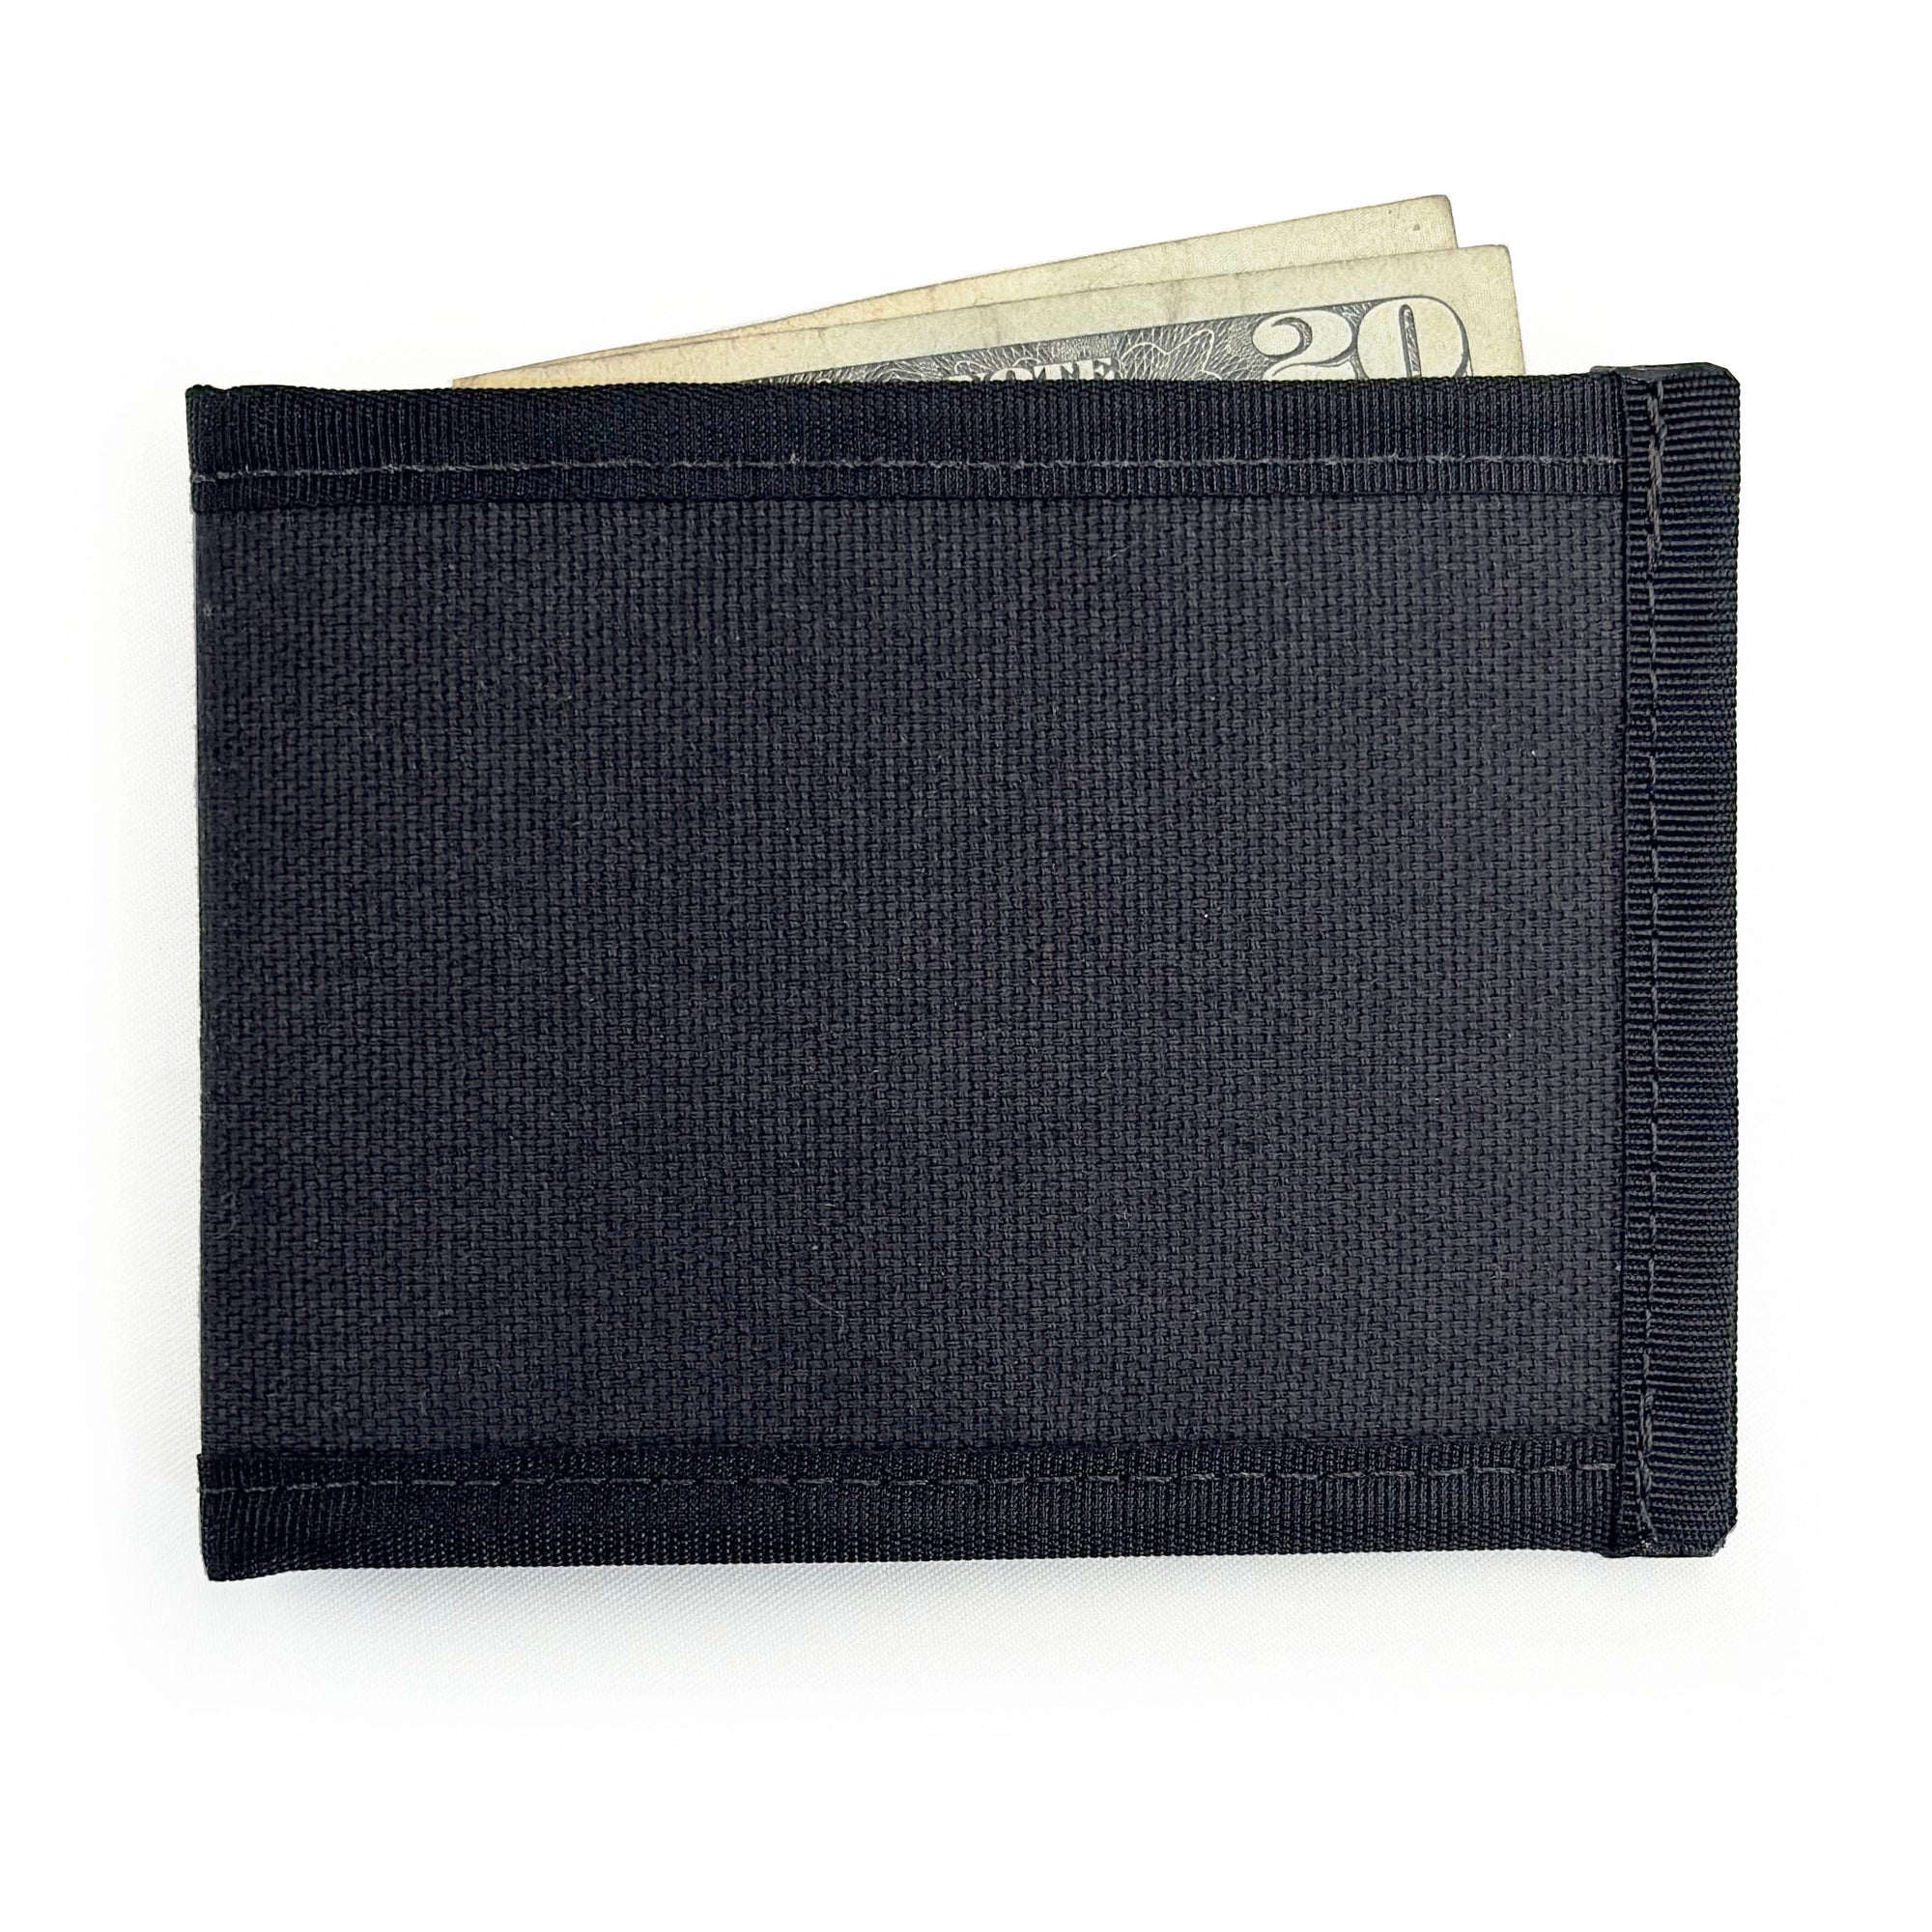 Flowfold Minimalist Slim Baxter Bifold Wallet Made in USA, Maine by Flowfold Black